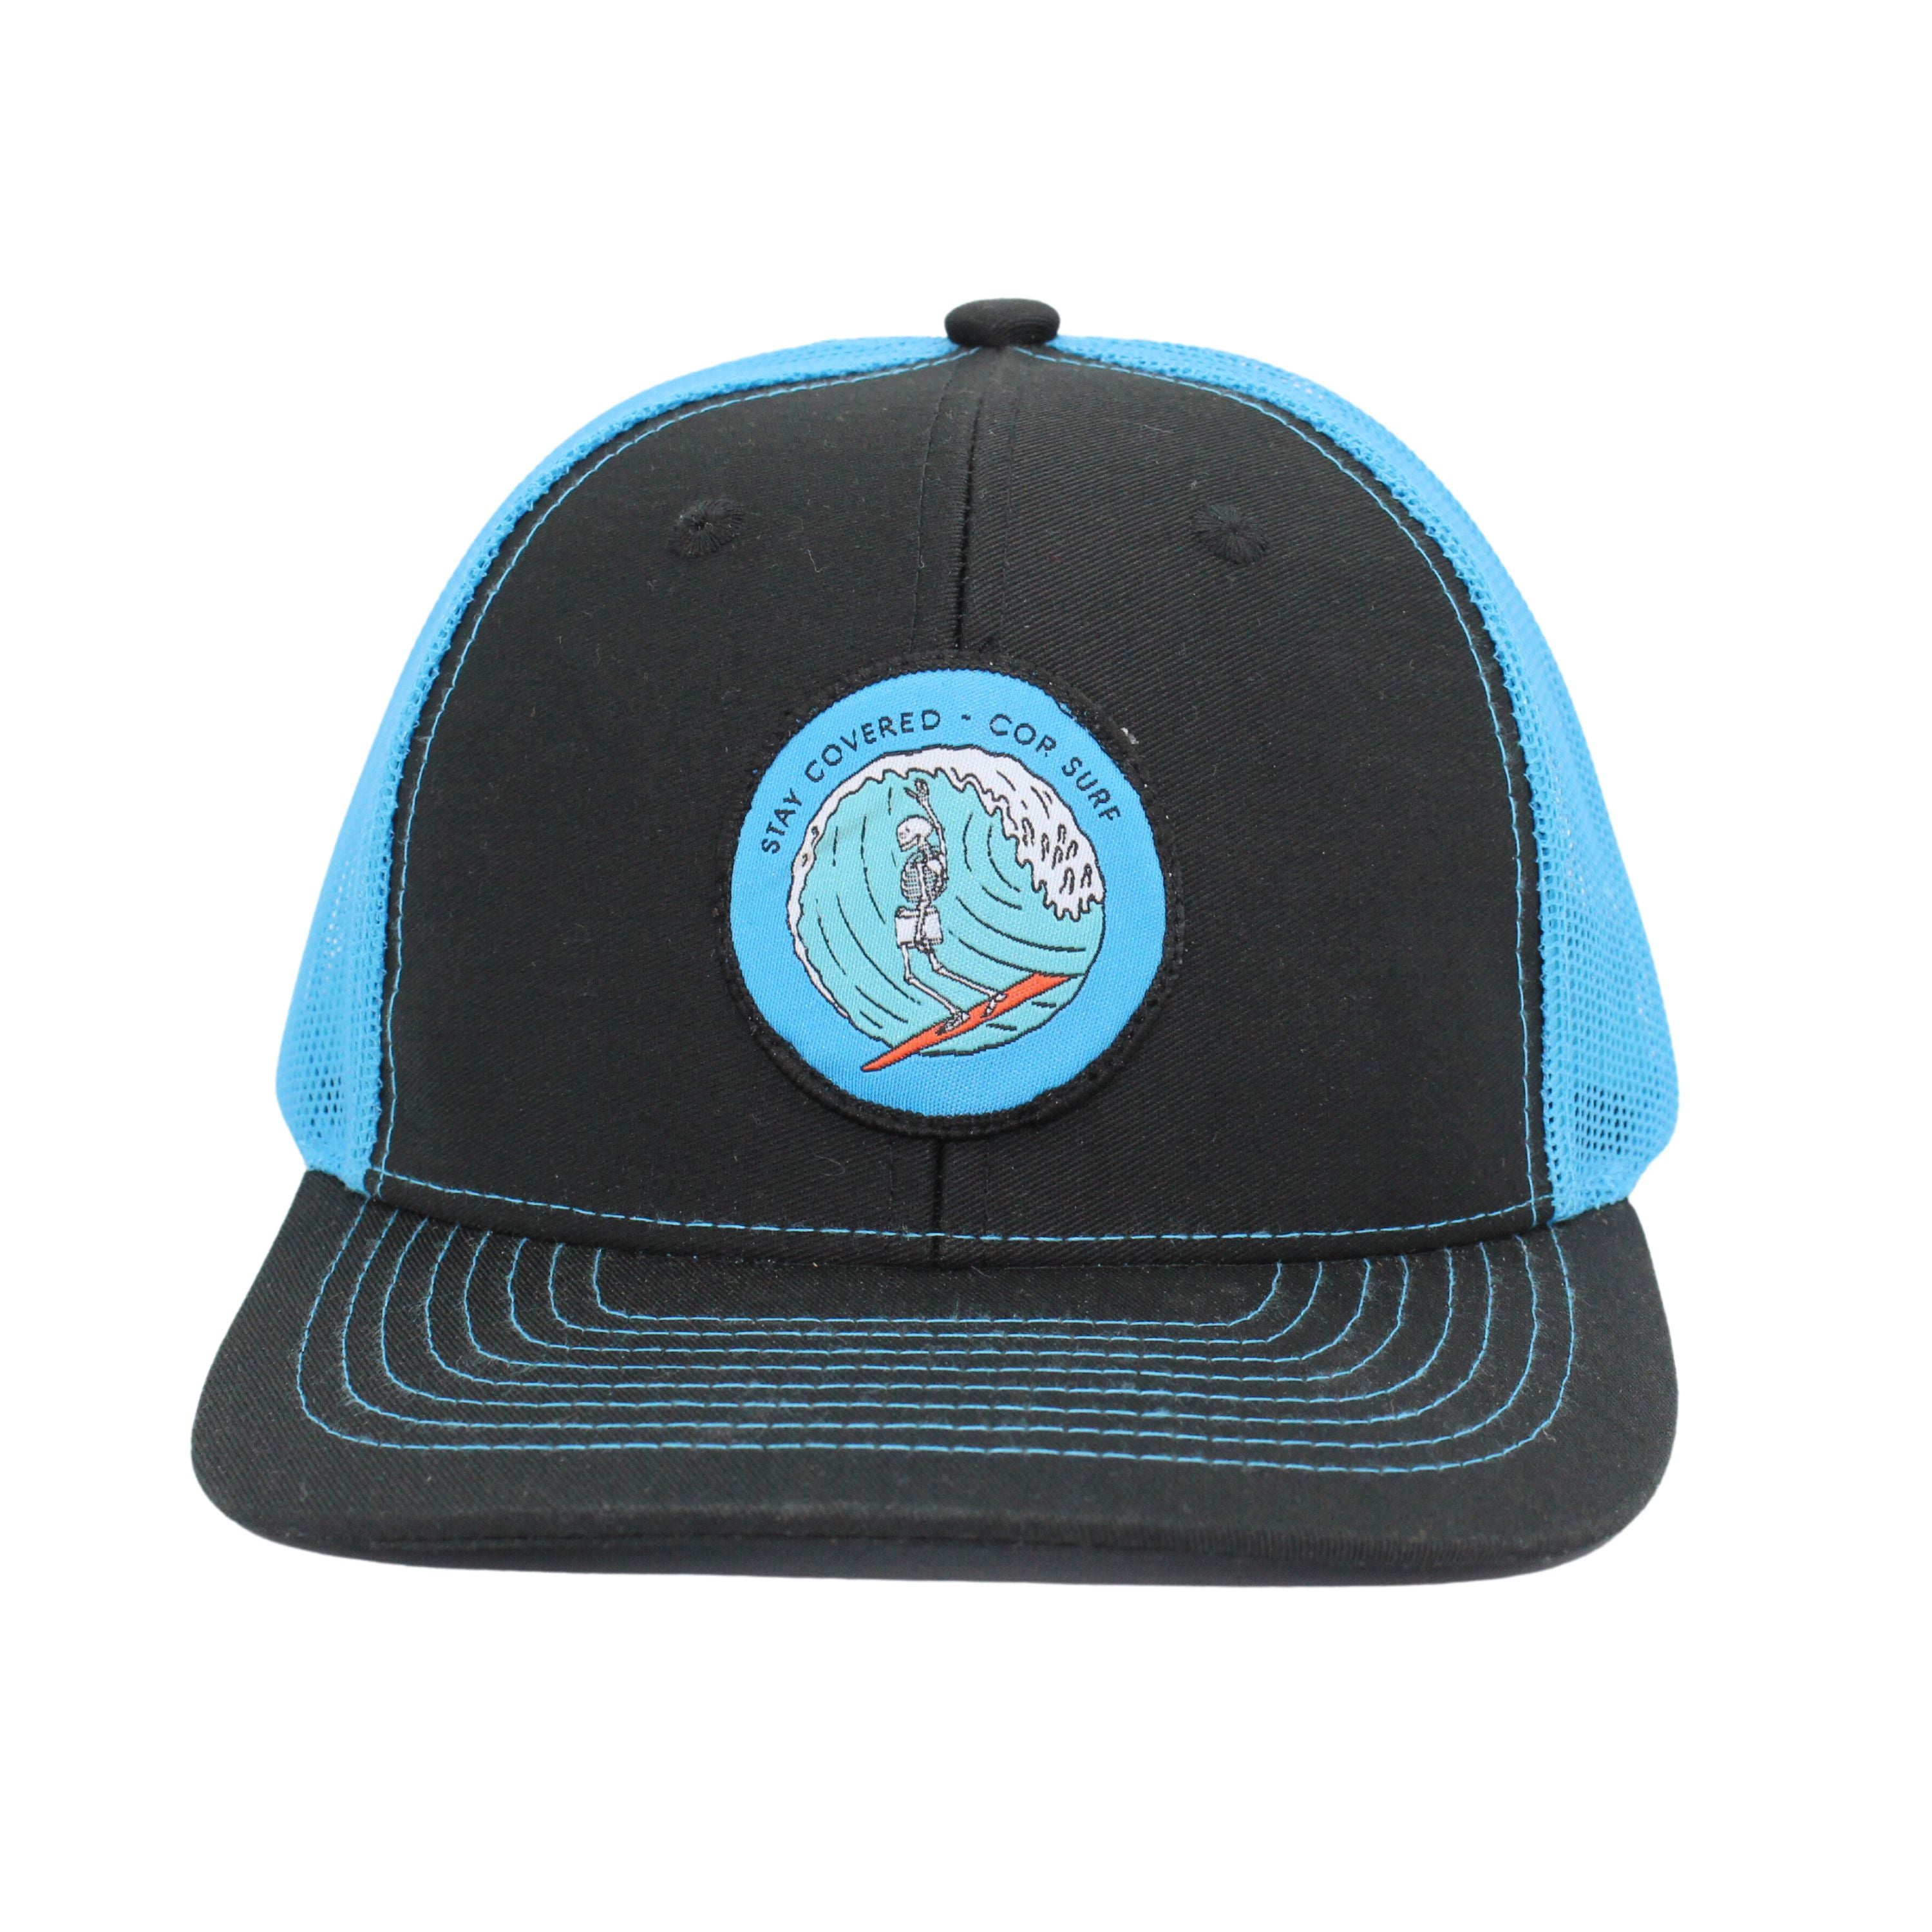 TRUCKER HAT BASEBALL CAP  BLUE